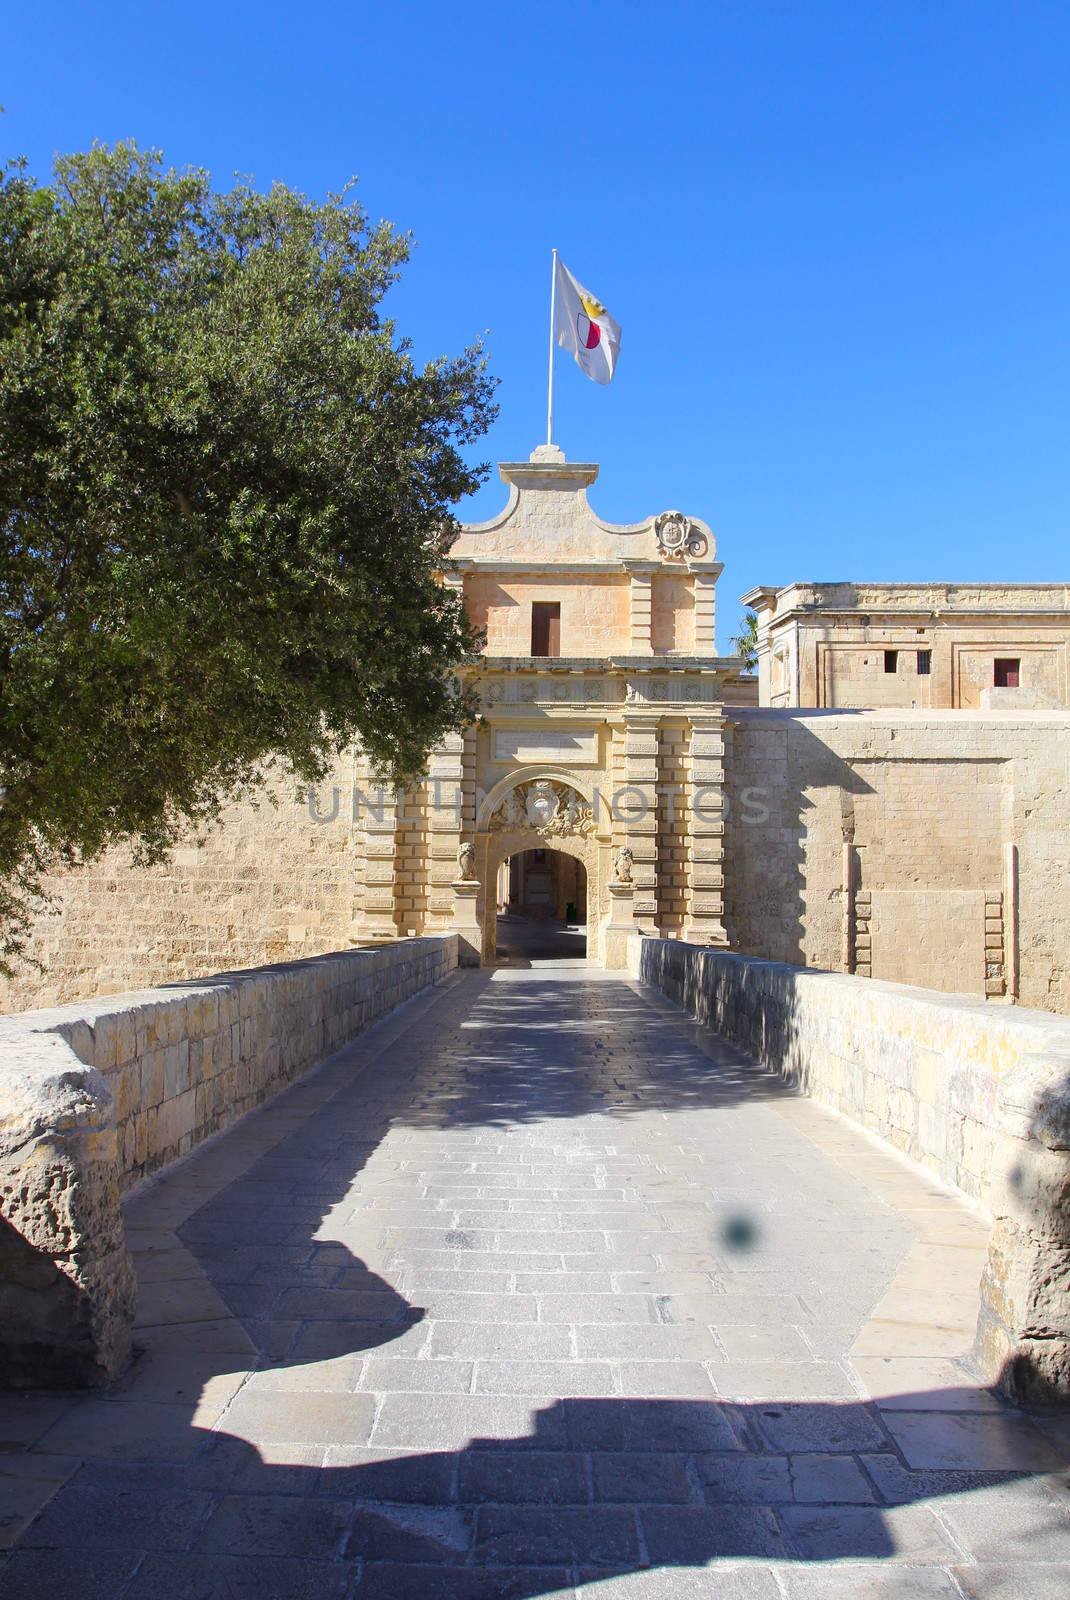 City gate Mdina, Malta by annems